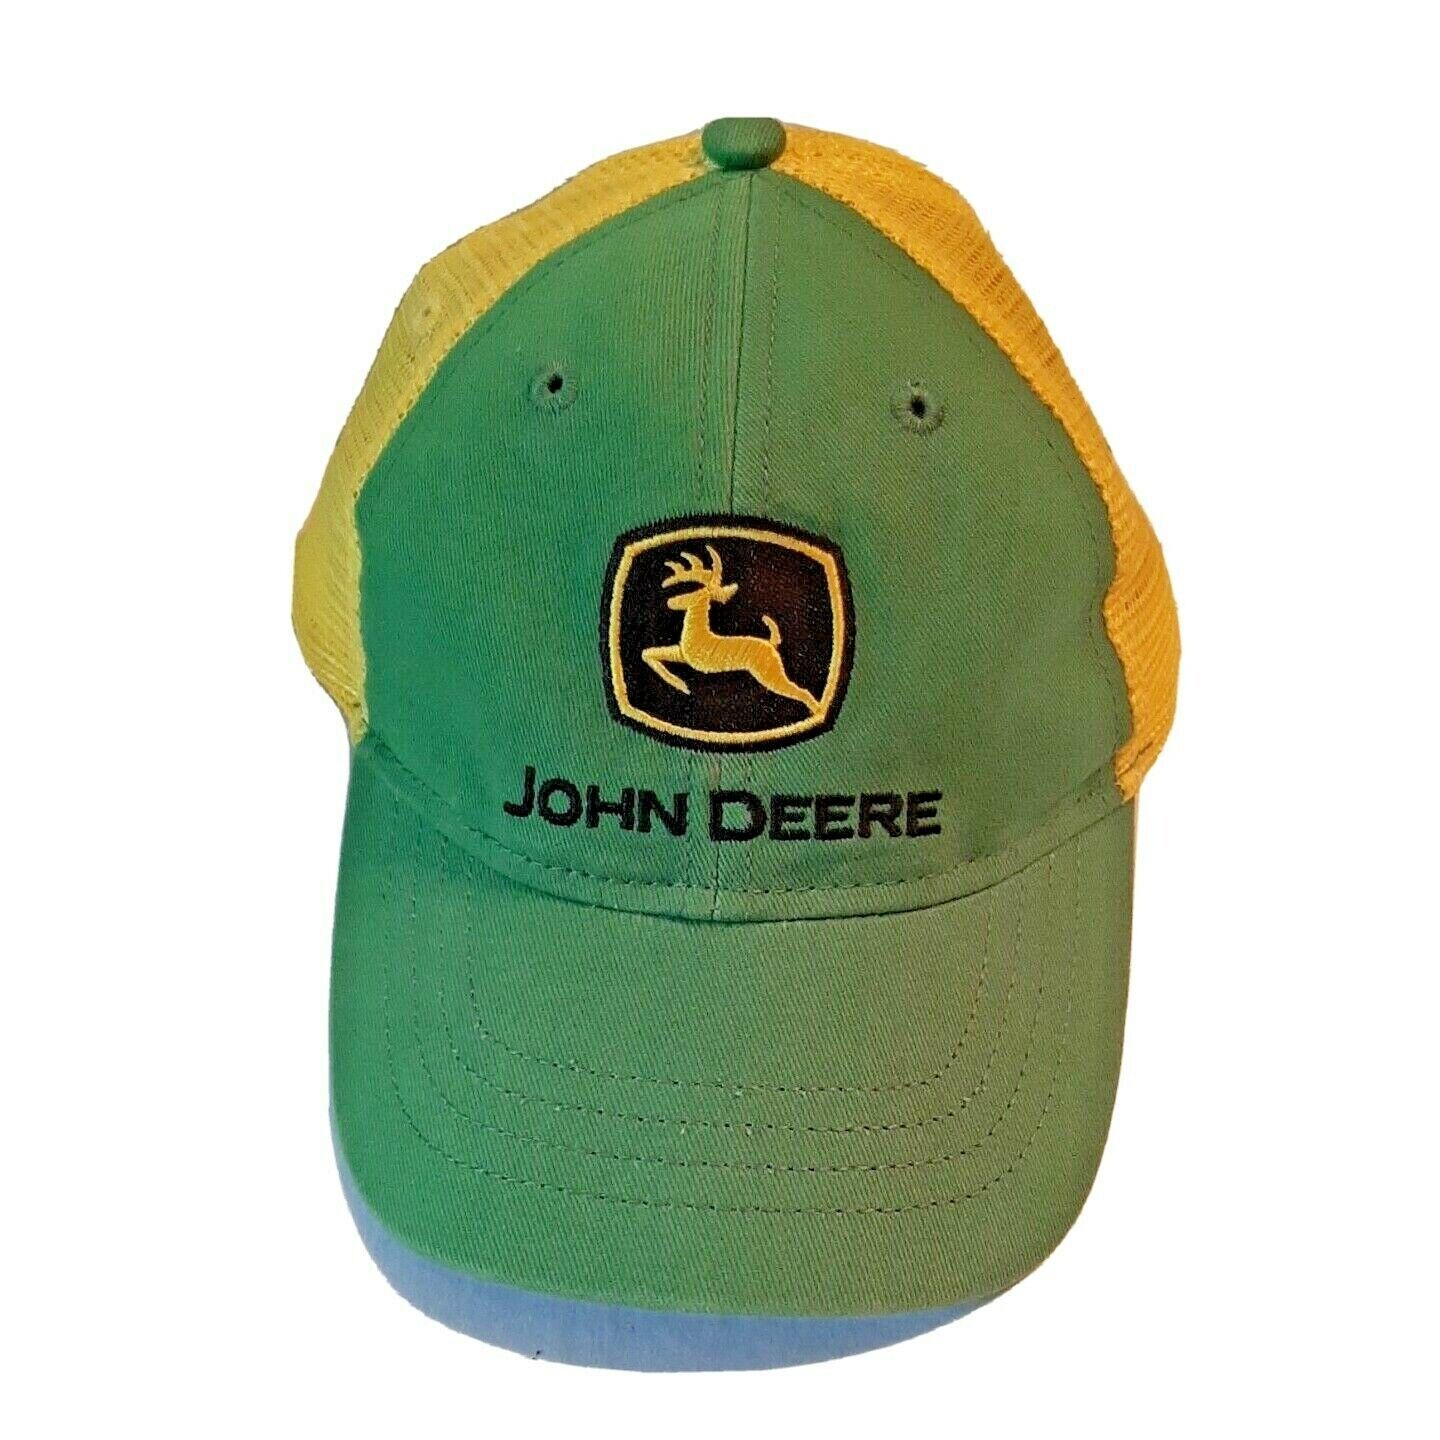 Primary image for Childs Toddler John Deere Baseball Cap Small Snap Back Mesh Green Yellow